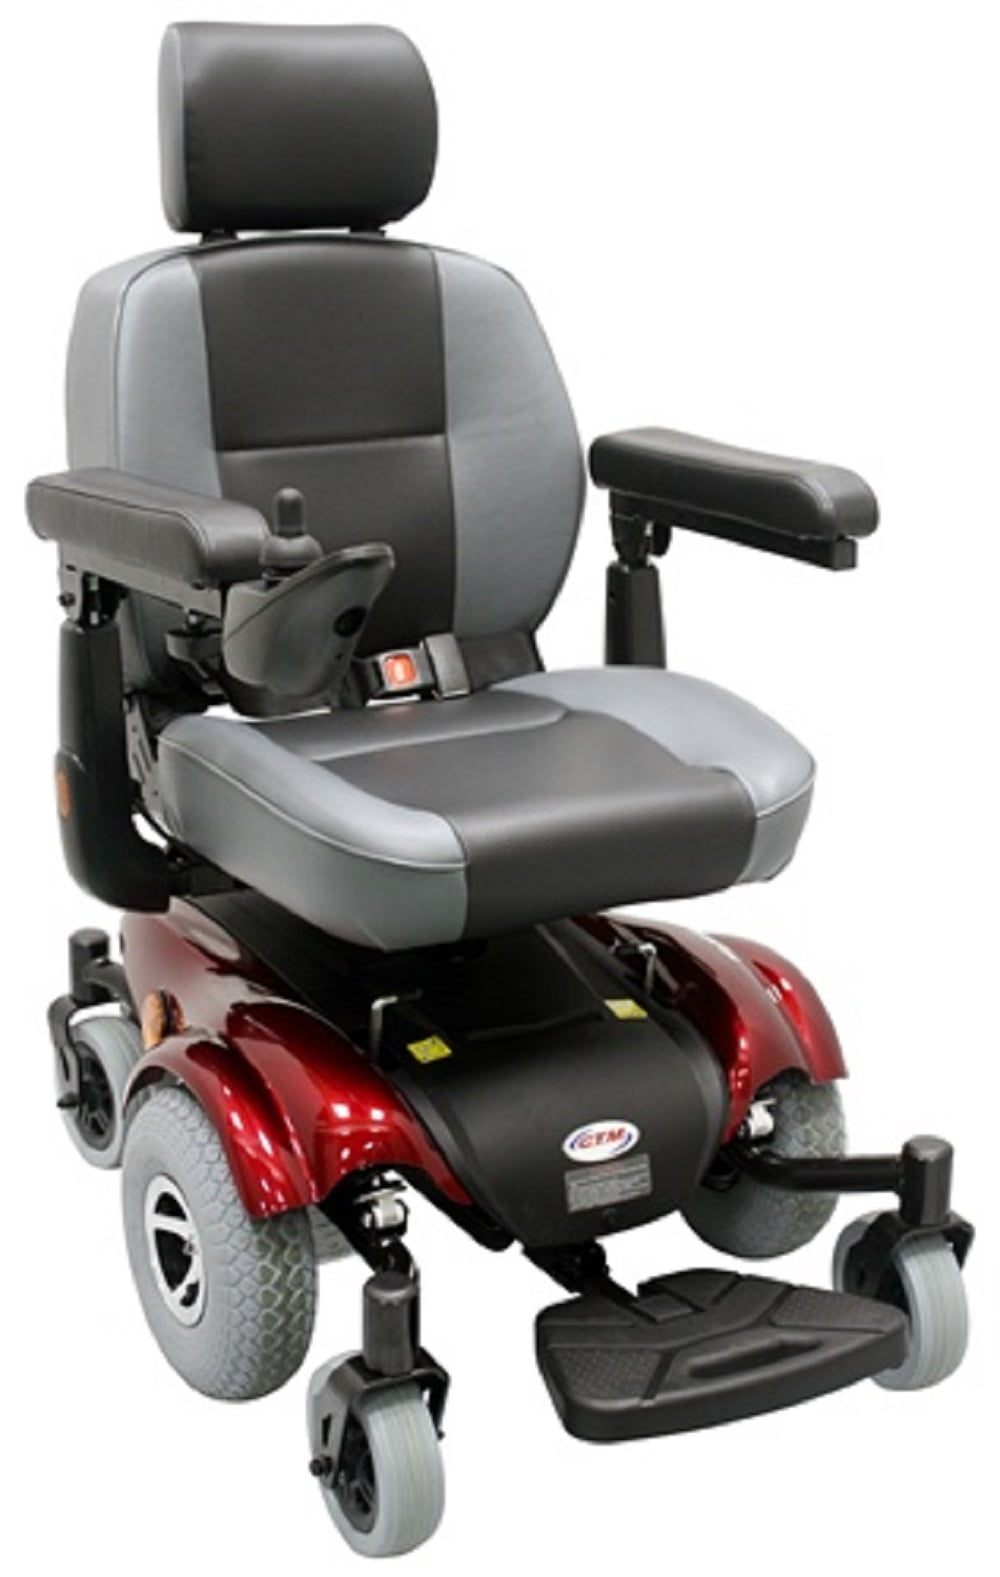 CTM - HS-2850 - Compact Mid Wheel Drive Power Chair - 19"W x 18" D